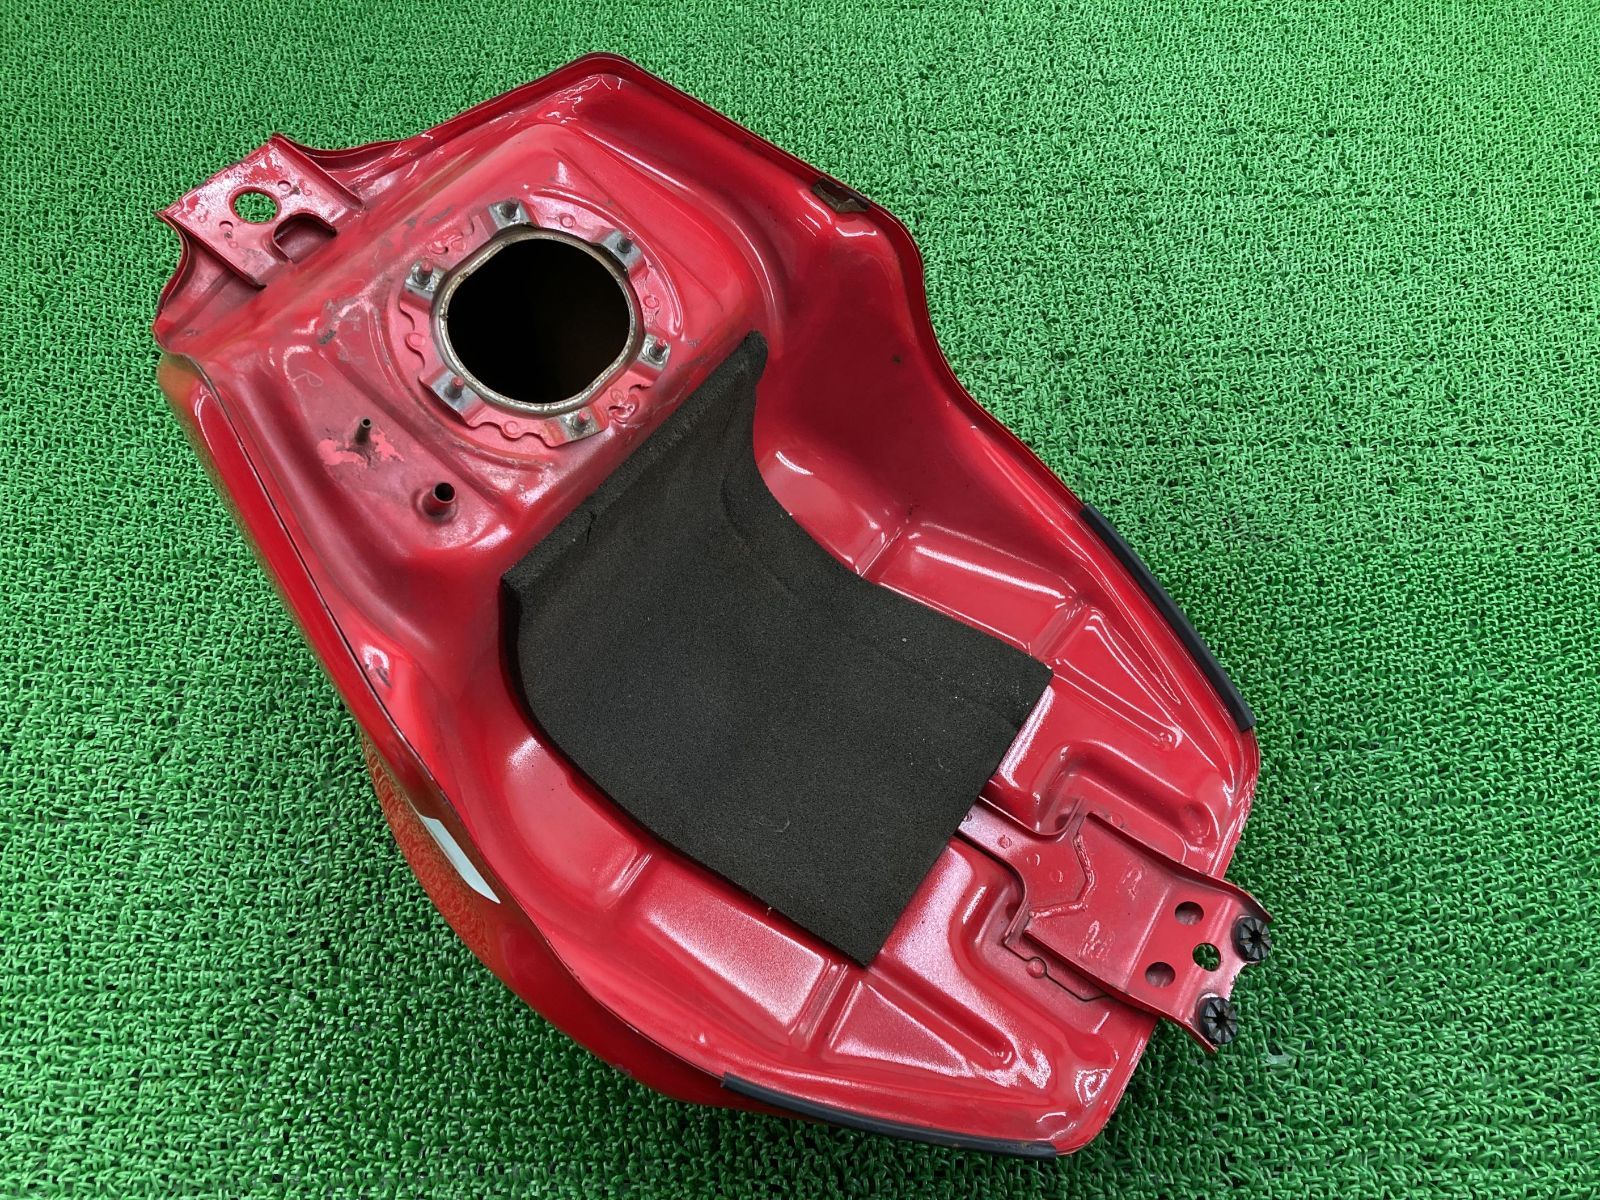 CBR900RR タンク 赤 ホンダ 純正  バイク 部品 SC44 穴あき無し ペイント素材に 修復素材に カスタム素材に 車検 Genuine:22157899